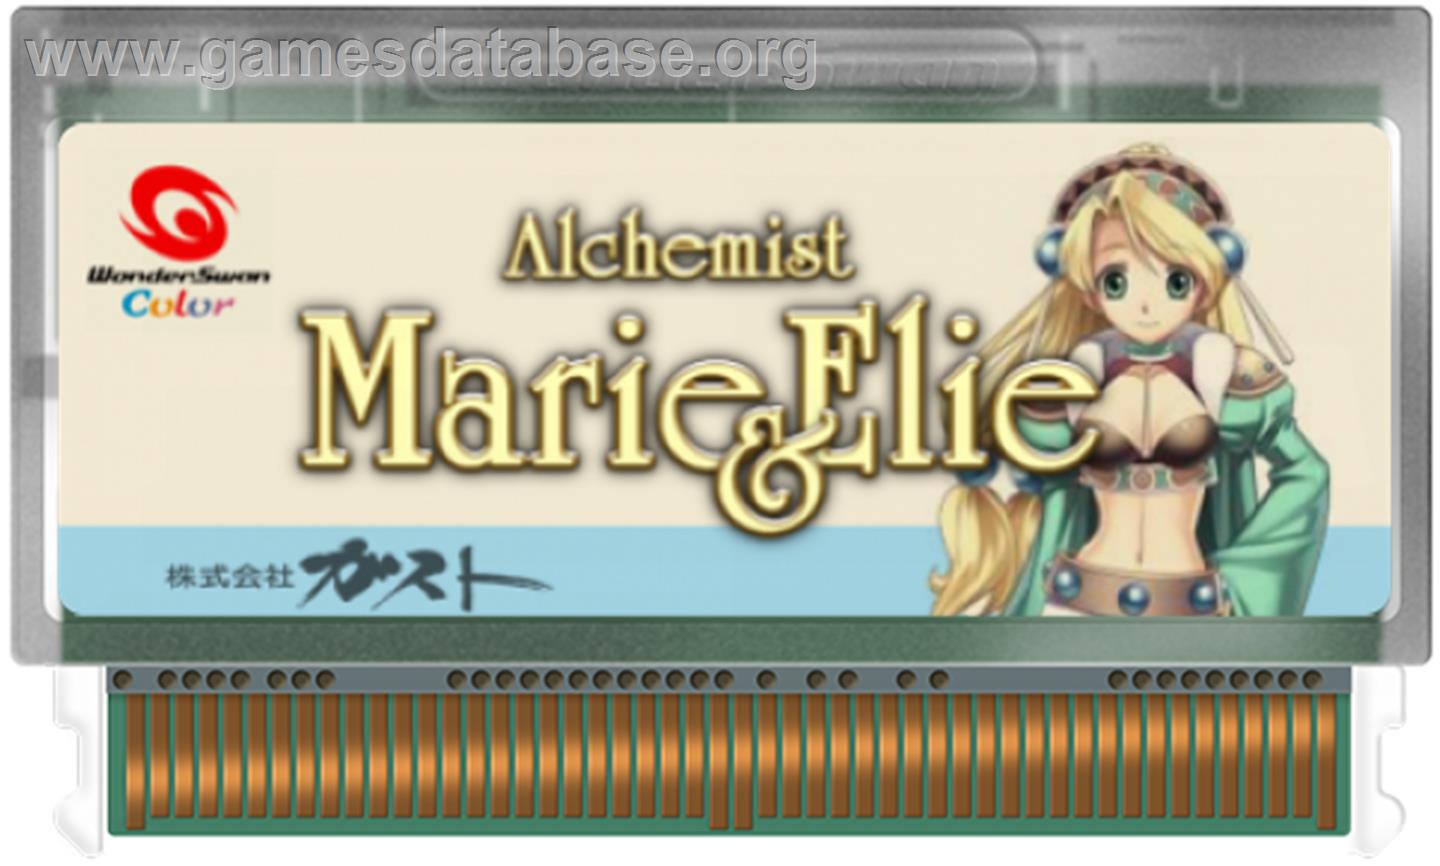 Alchemist Marie & Elie: Futari no Atelier - Bandai WonderSwan Color - Artwork - Cartridge